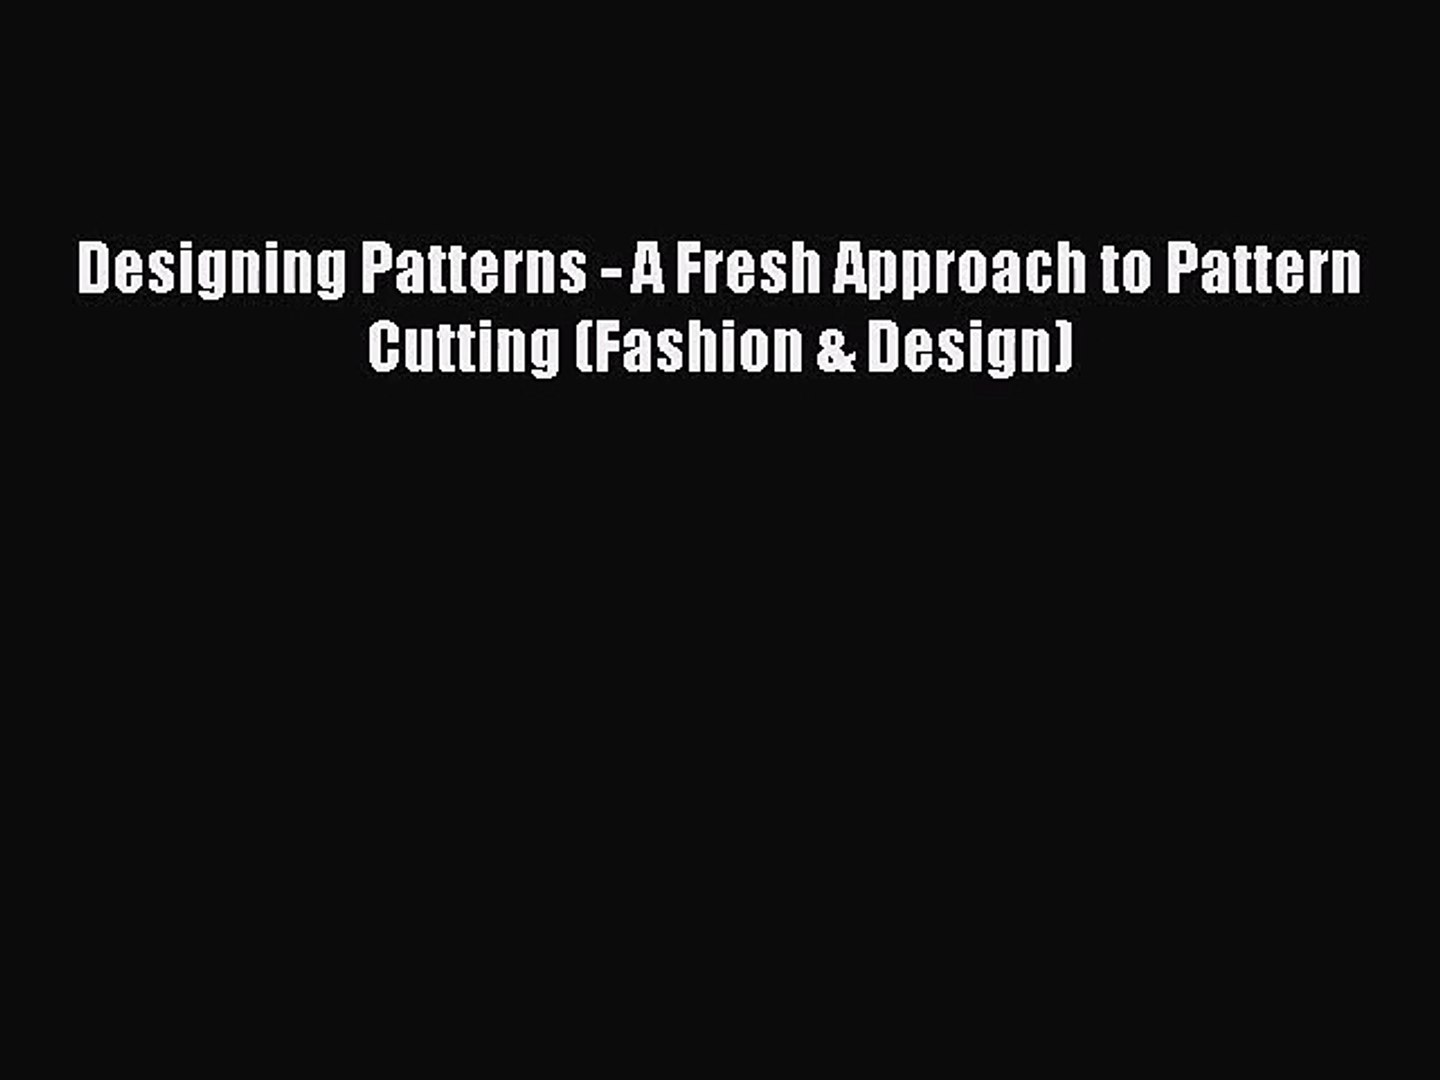 [PDF Download] Designing Patterns - A Fresh Approach to Pattern Cutting (Fashion & Design)